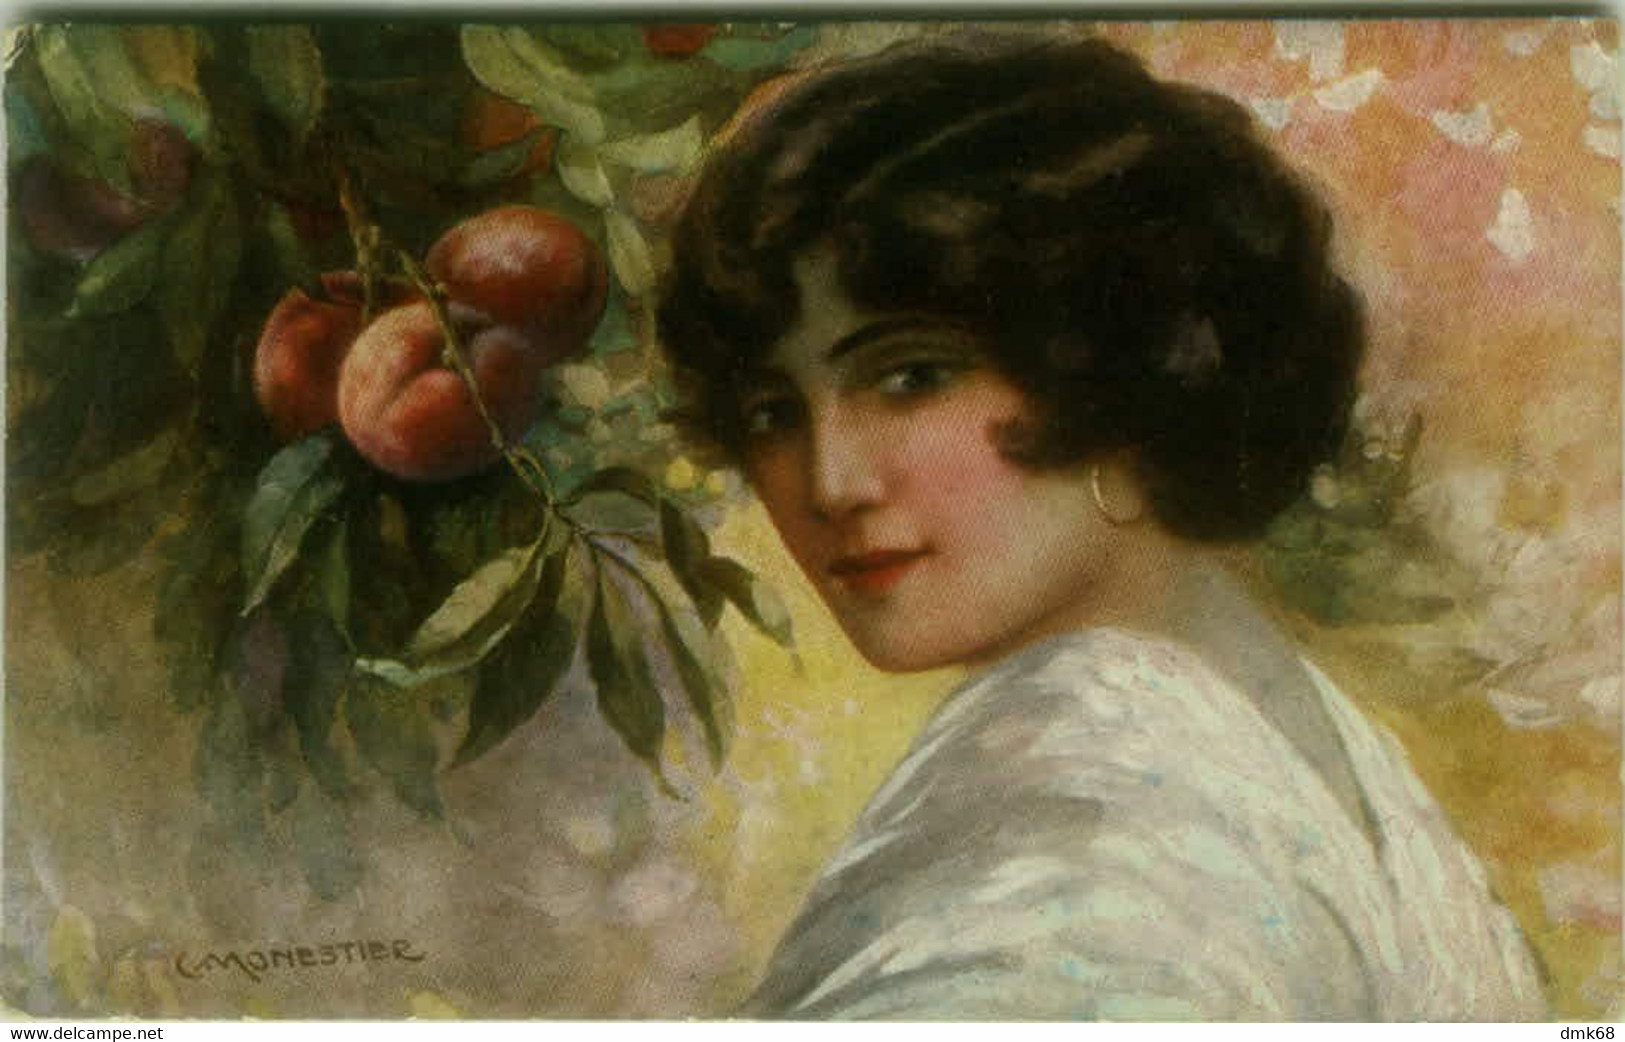 MONESTIER SIGNED 1920s POSTCARD - WOMAN WITH FRUITS - SERIE 871 (BG1905) - Monestier, C.